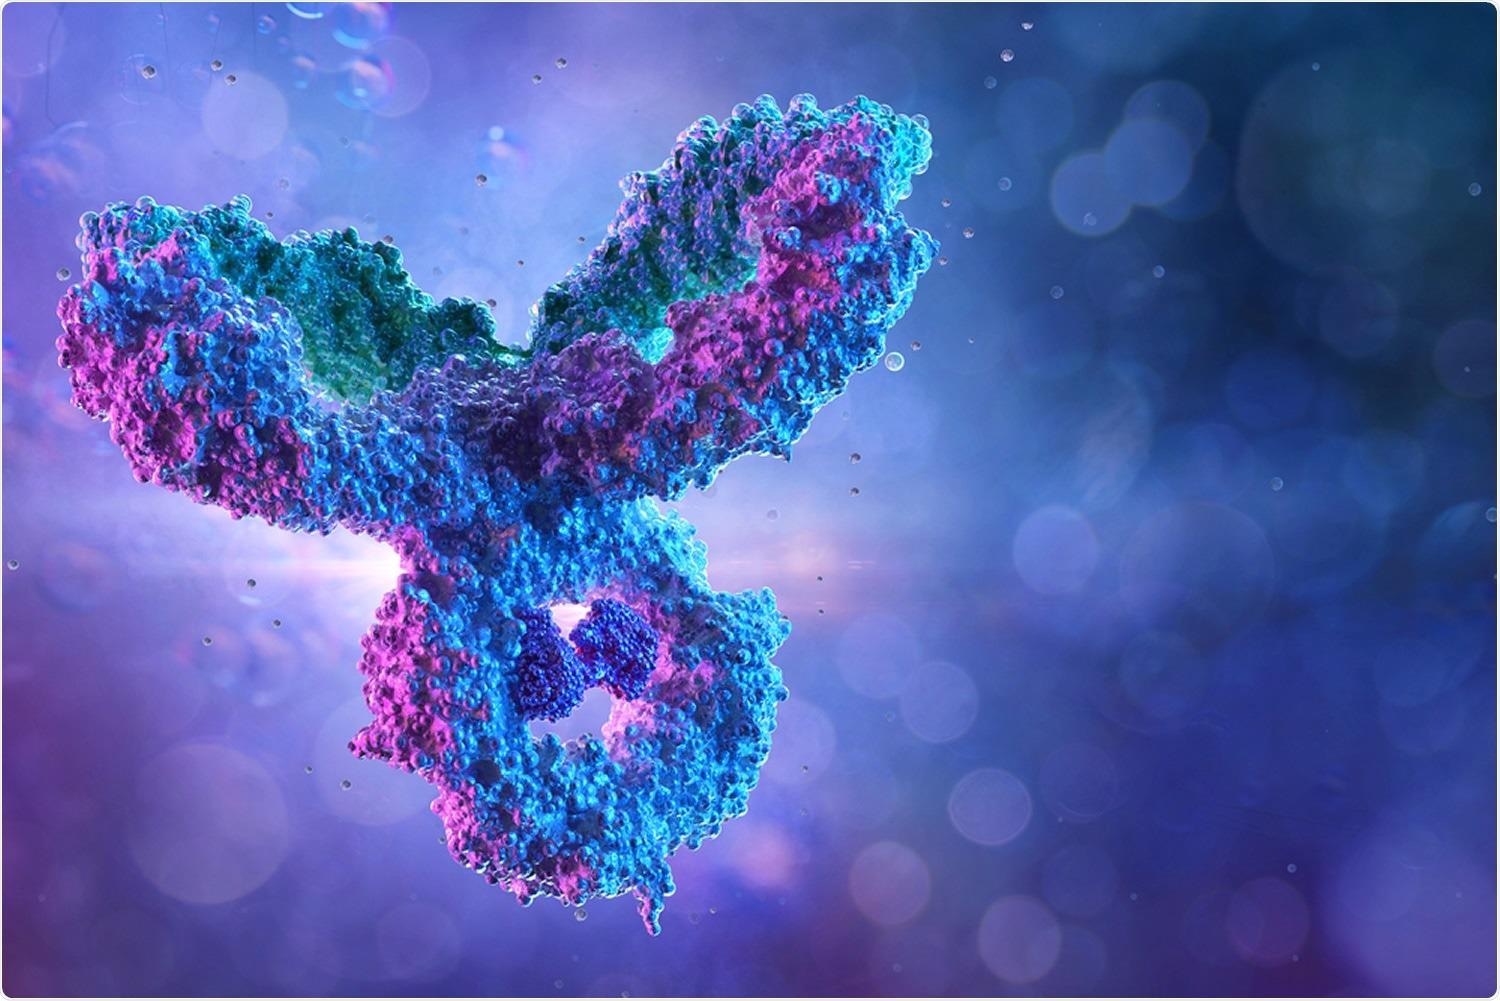 Study: Heterologous SARS-CoV-2 IgA neutralising antibody responses in convalescent plasma. Image Credit: Corona Borealis Studio / Shutterstock